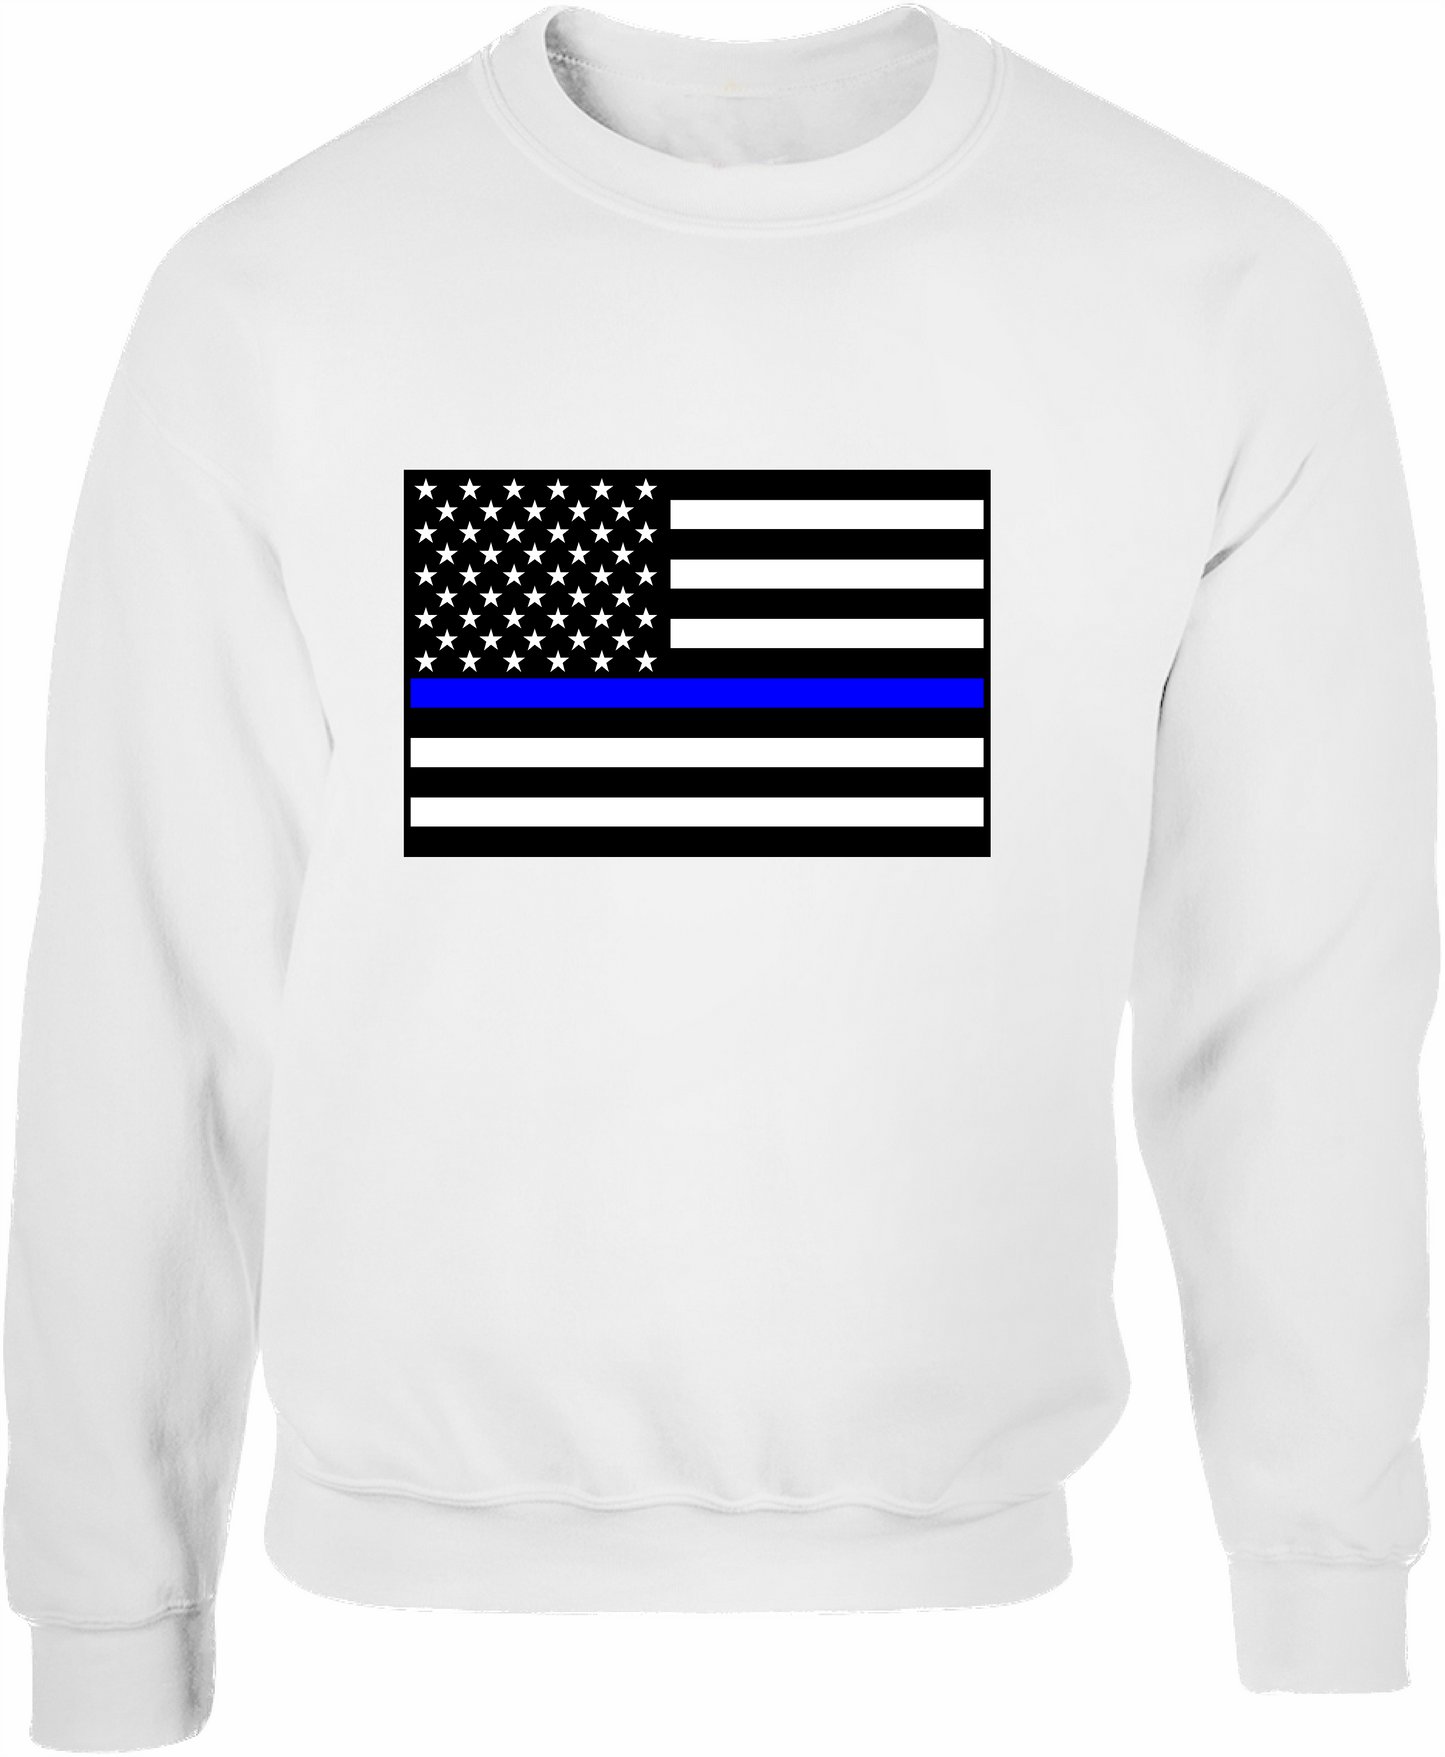 Thin Blue Line American Flag Crewneck Sweatshirt